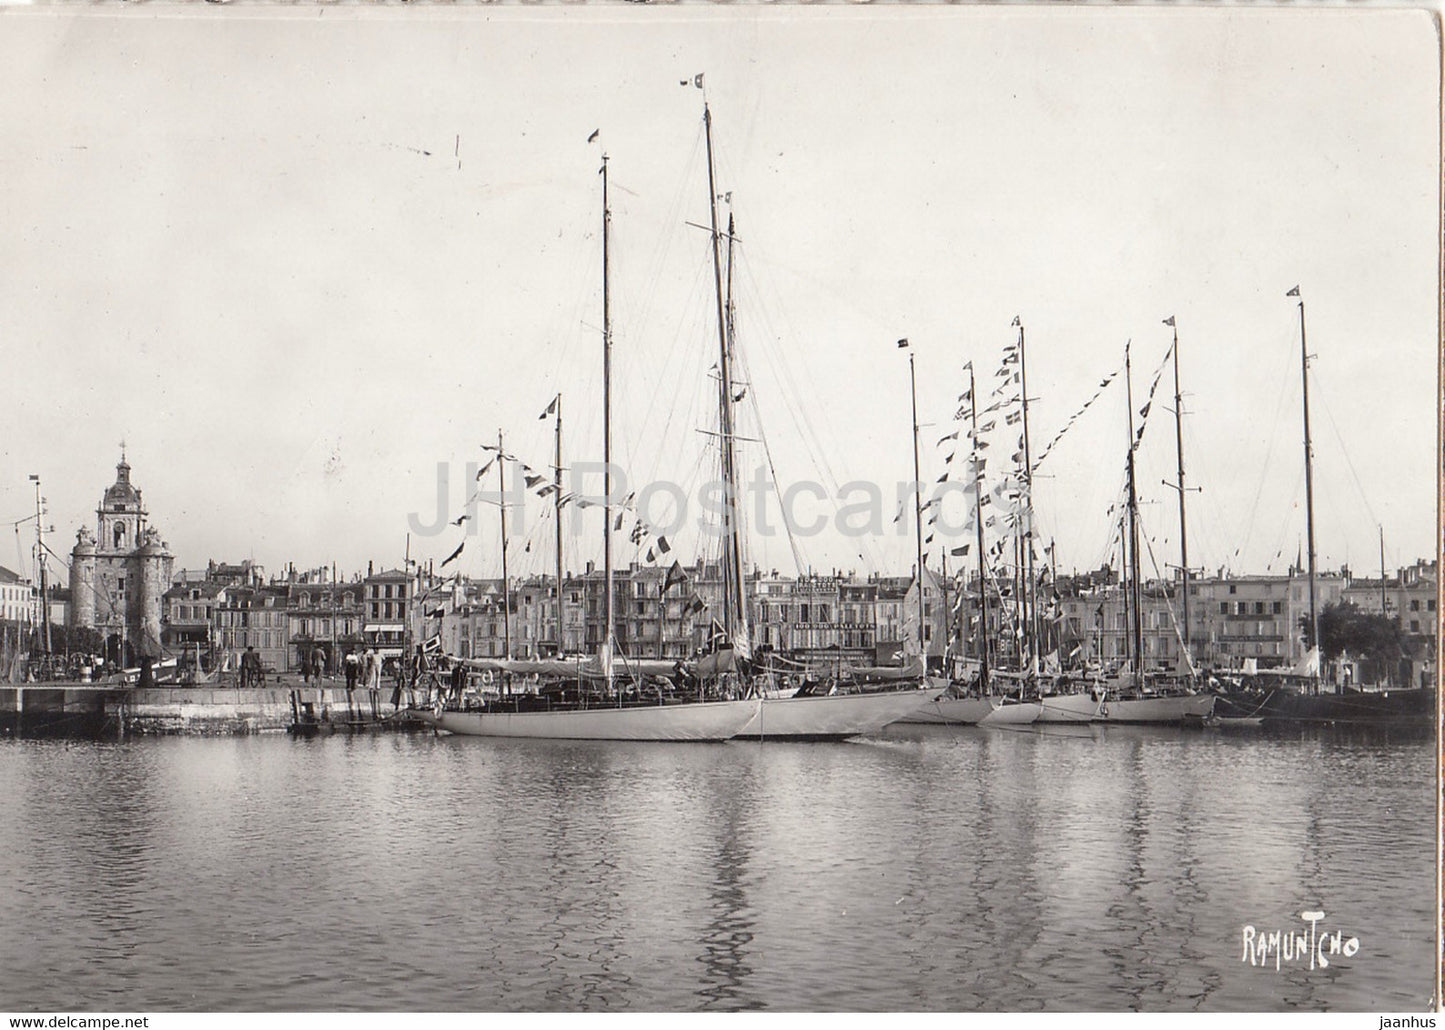 Port de La Rochelle - Bassin Interieur - sailing boat - old postcard - France - unused - JH Postcards